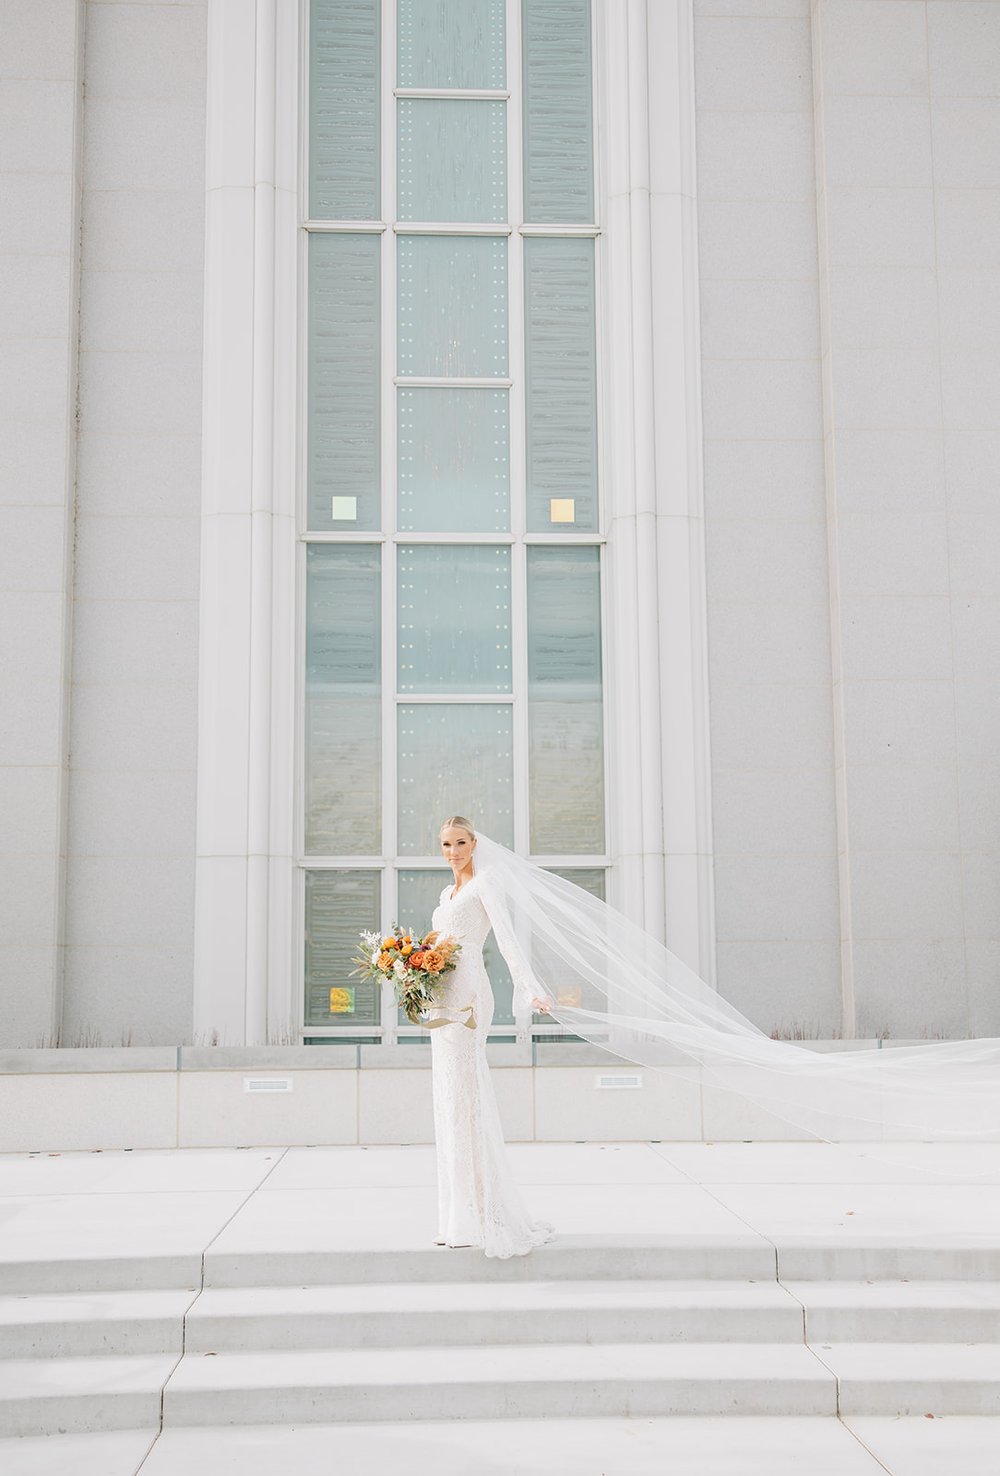 Anthology Print Wedding Invitations - Utah Wedding Venue - Utah Wedding Photographer - Boho Fall Wedding Inspiration - Utah Wedding Planner - River Bridge Wedding Venue3 (6).jpg